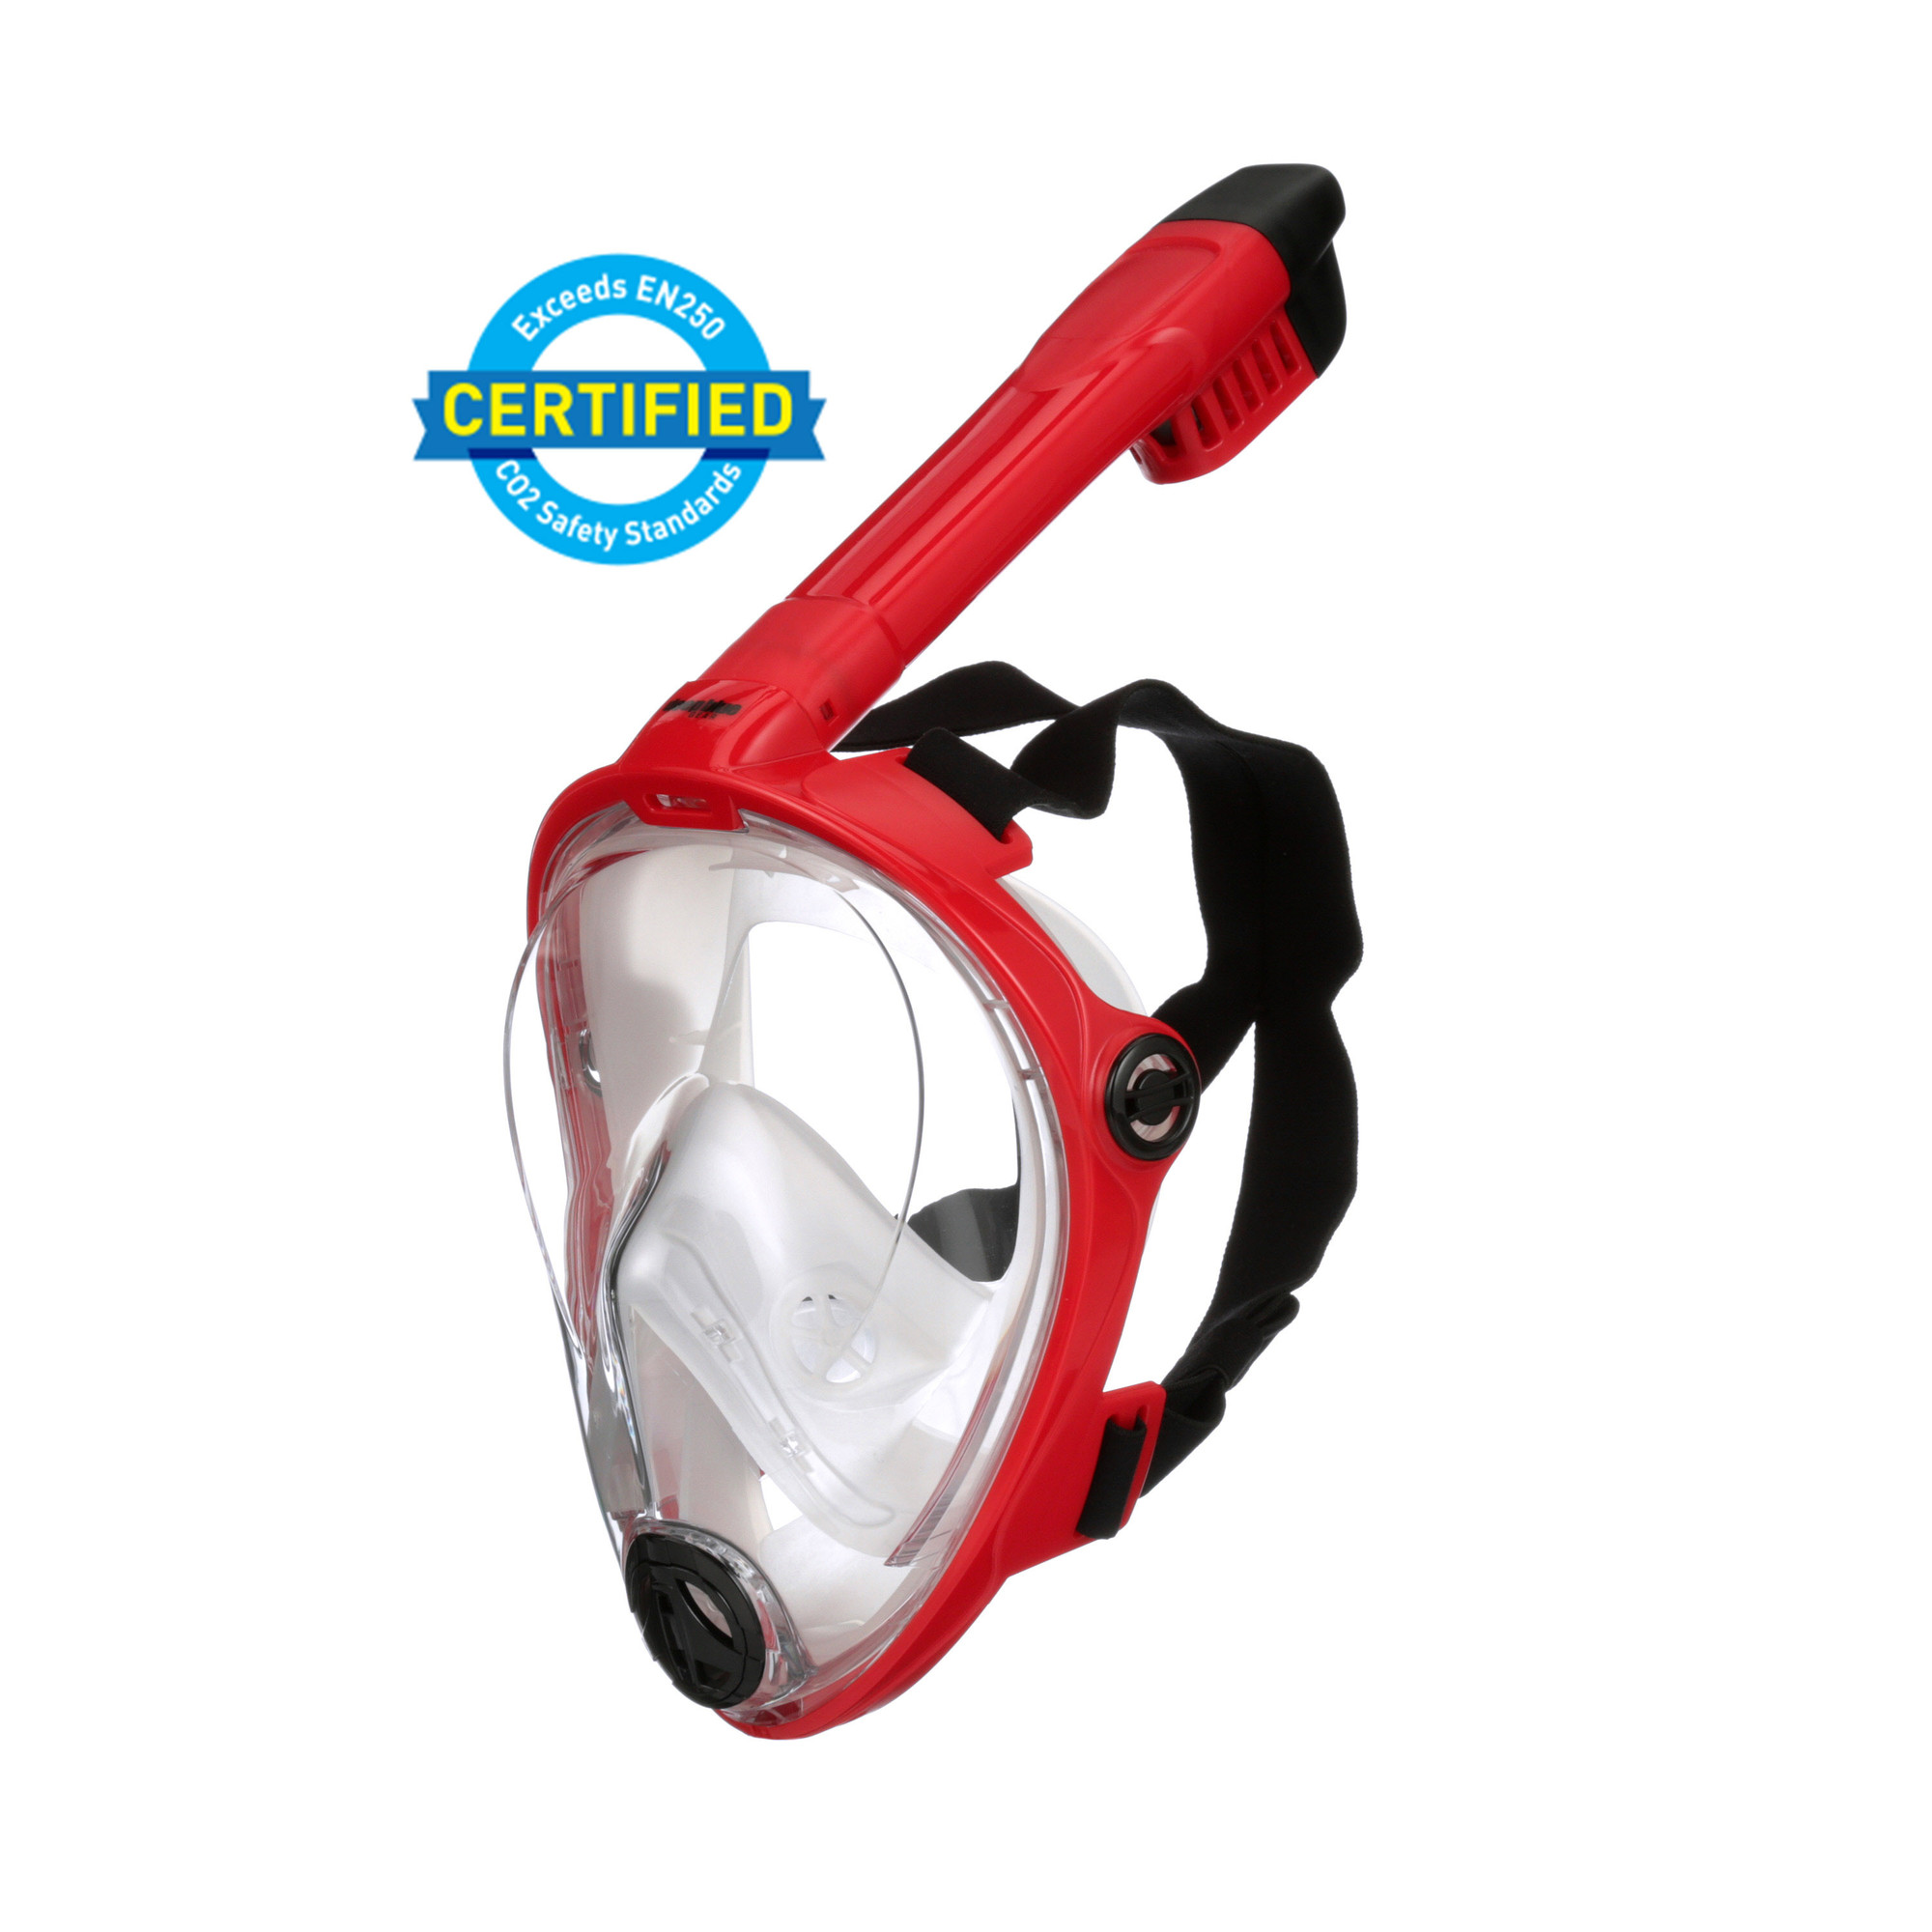 Vista Vue - Full Face Snorkeling Mask